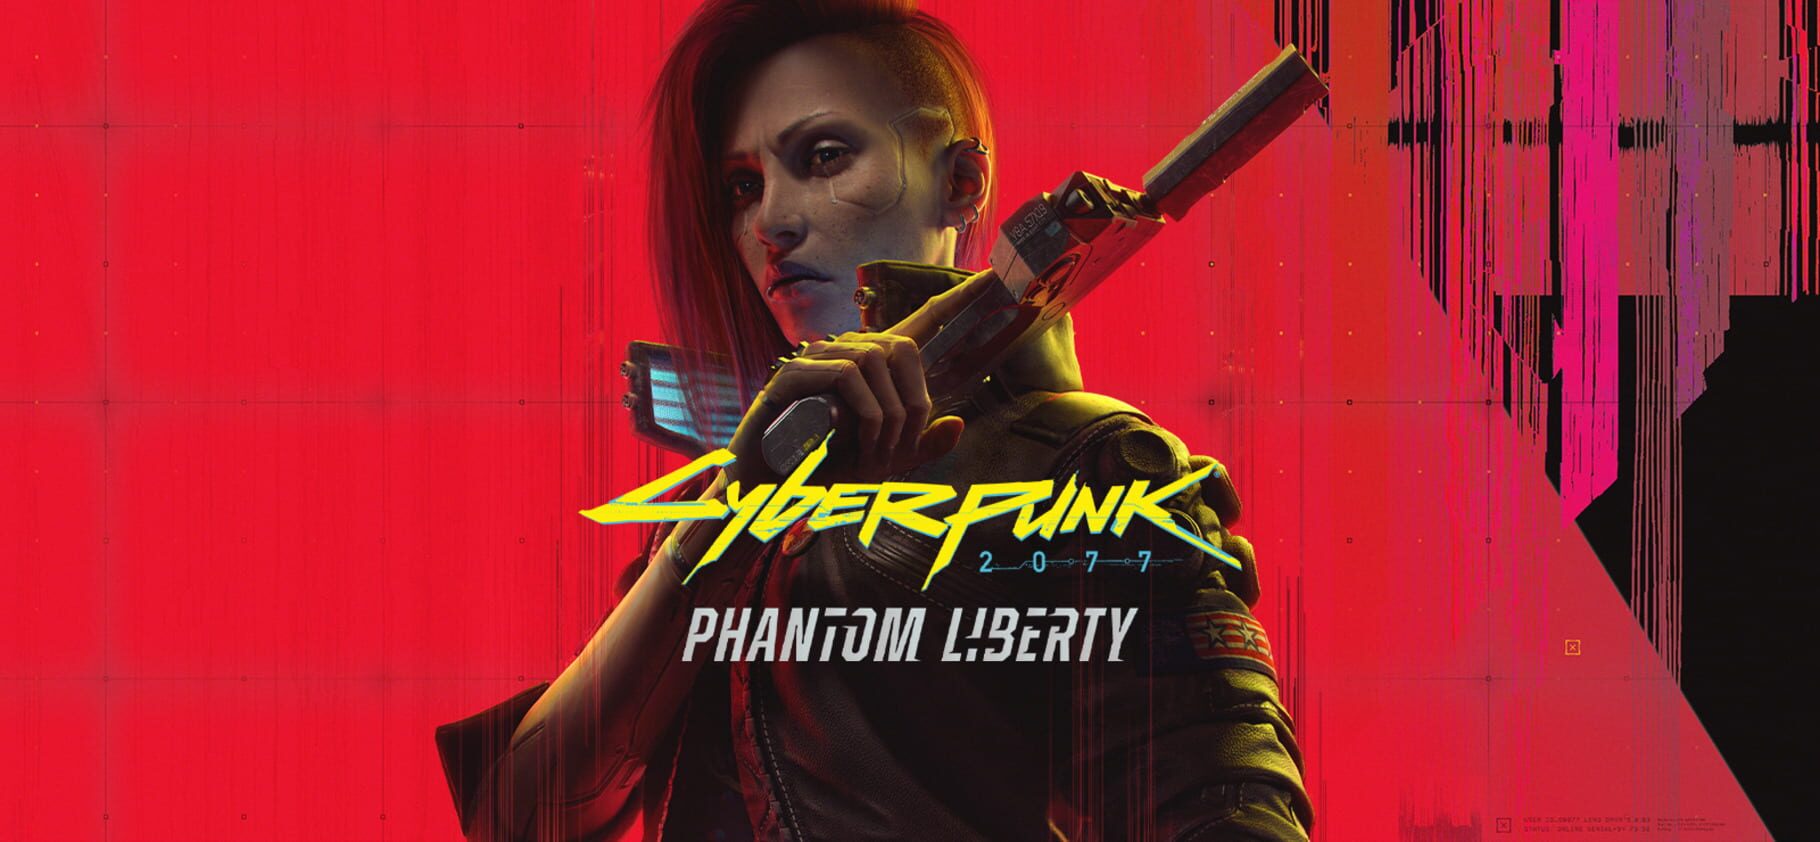 Artwork for Cyberpunk 2077: Phantom Liberty